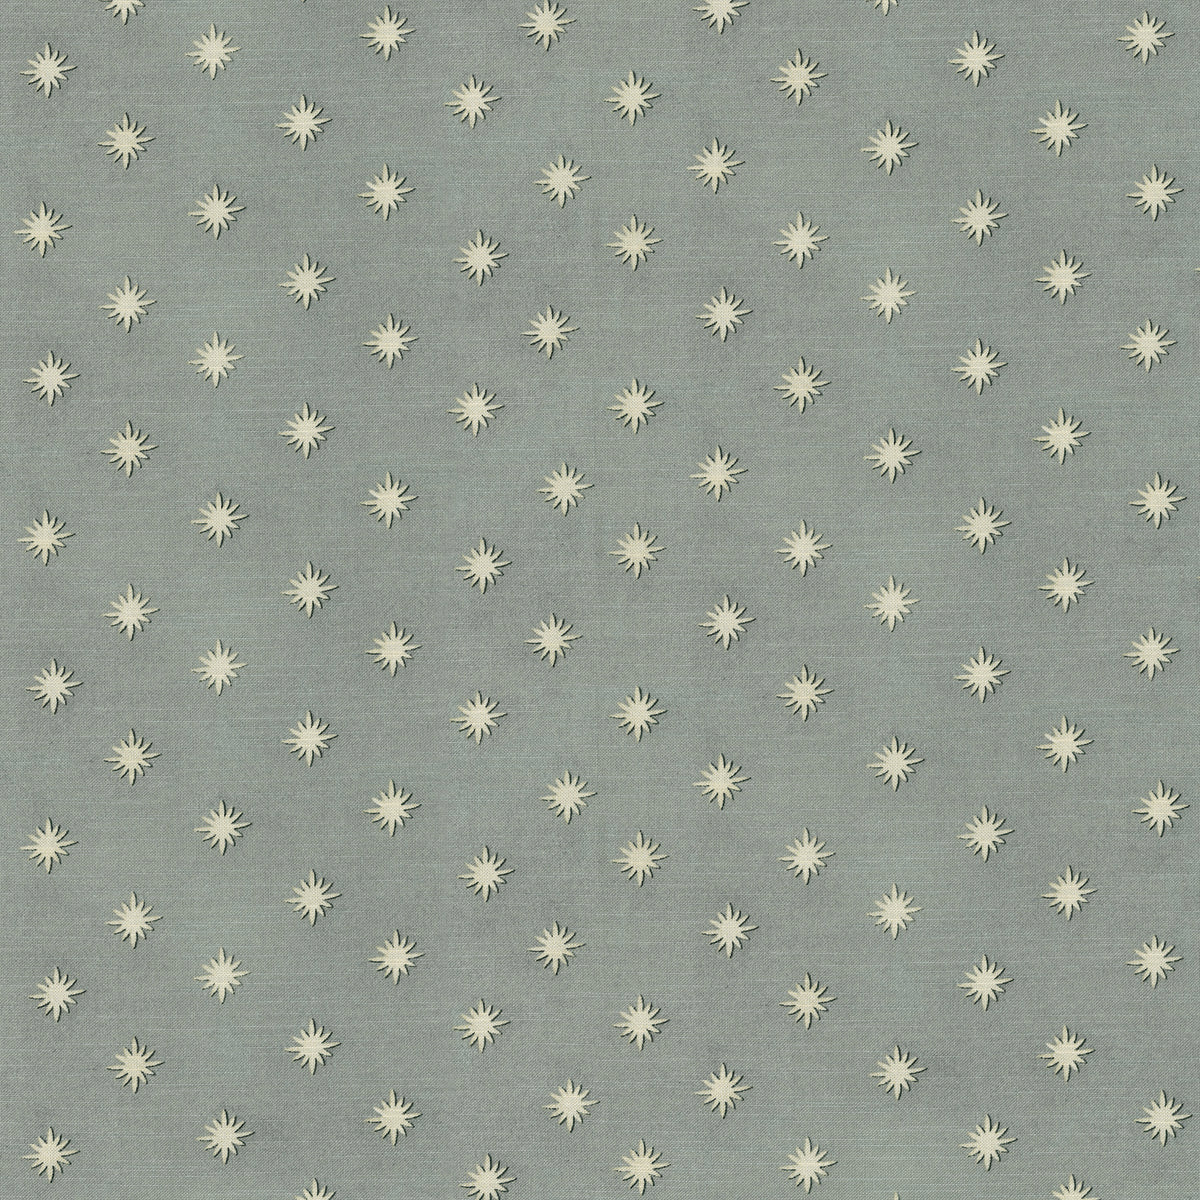 P/K Lifestyles Starry - Cream 412212 Upholstery Fabric